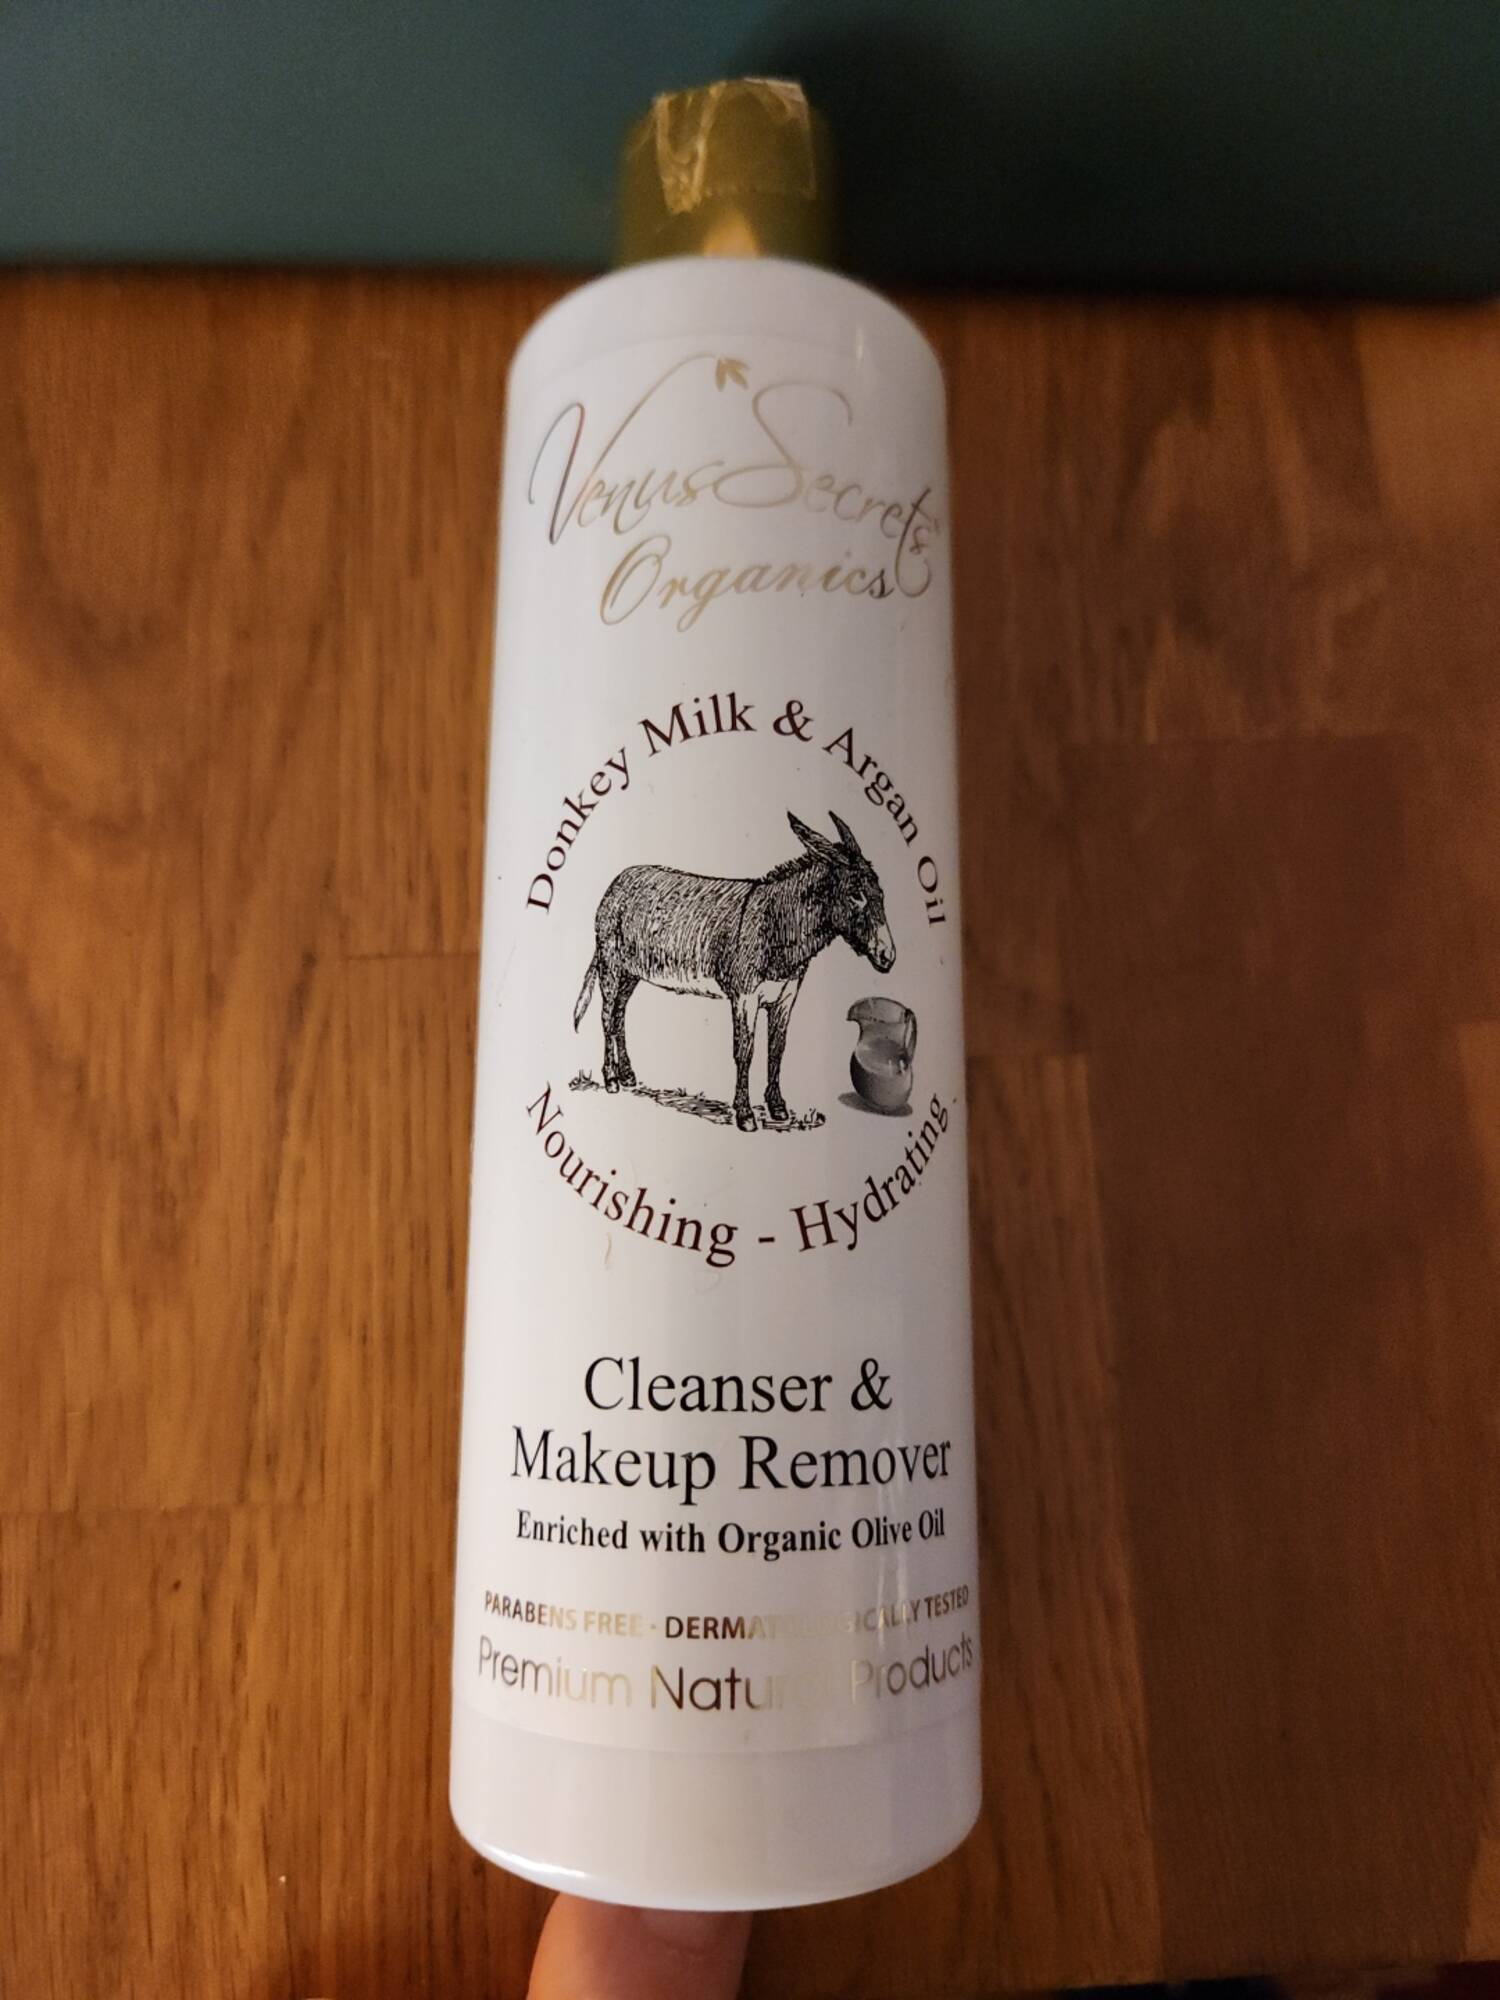 VENUS SECRETS - Donkey milk & argan oil - Cleanser & makeup remover